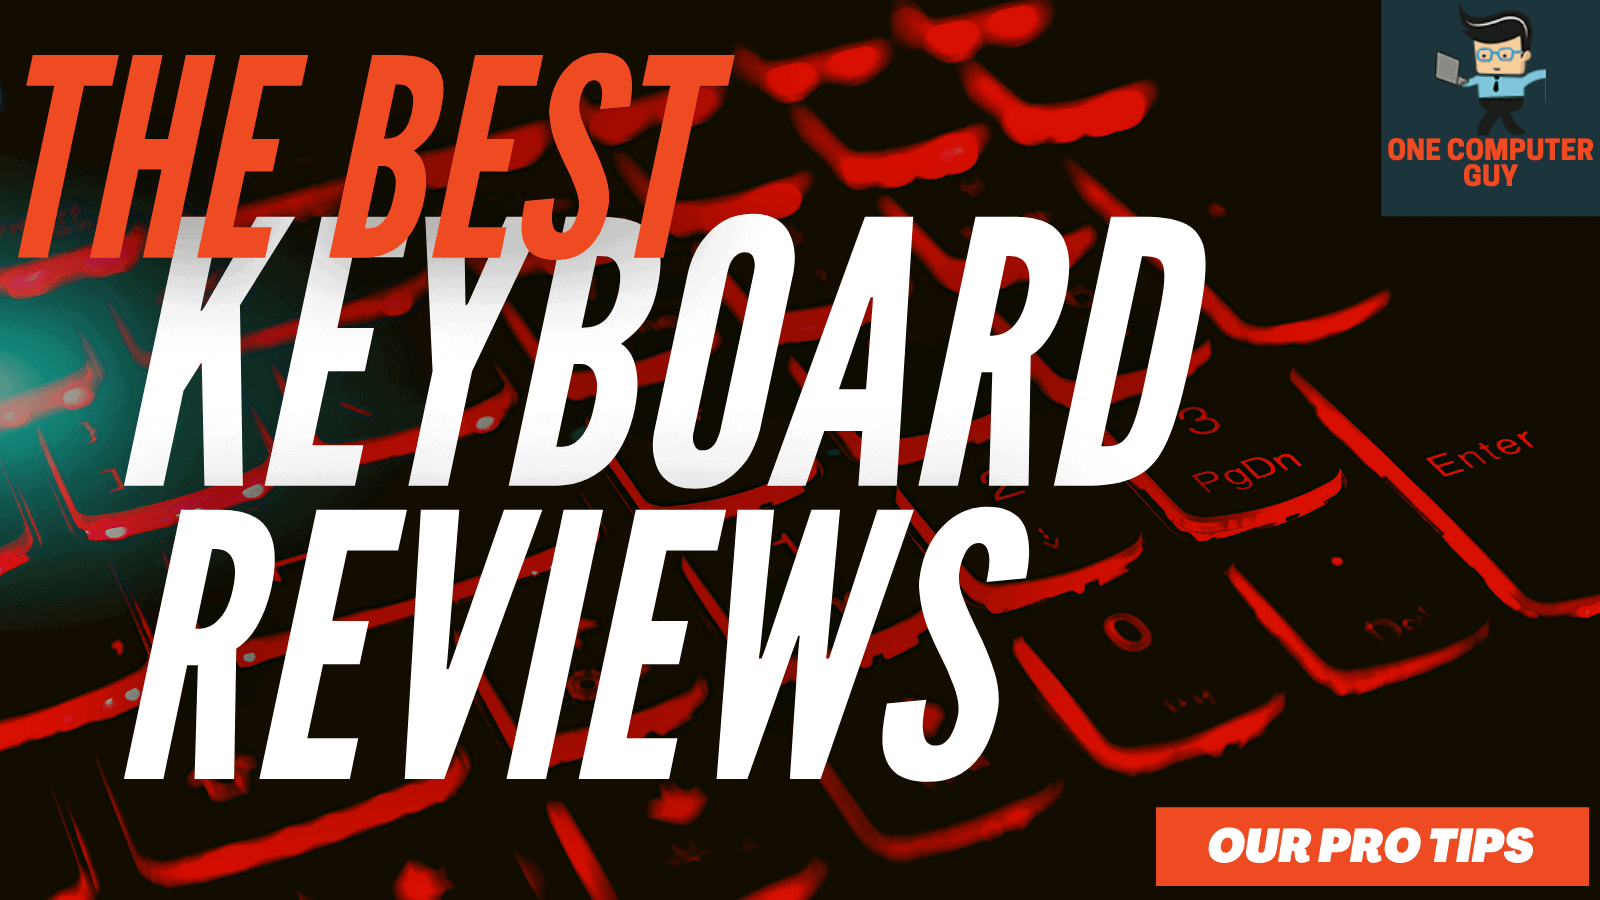 Keyboard reviews